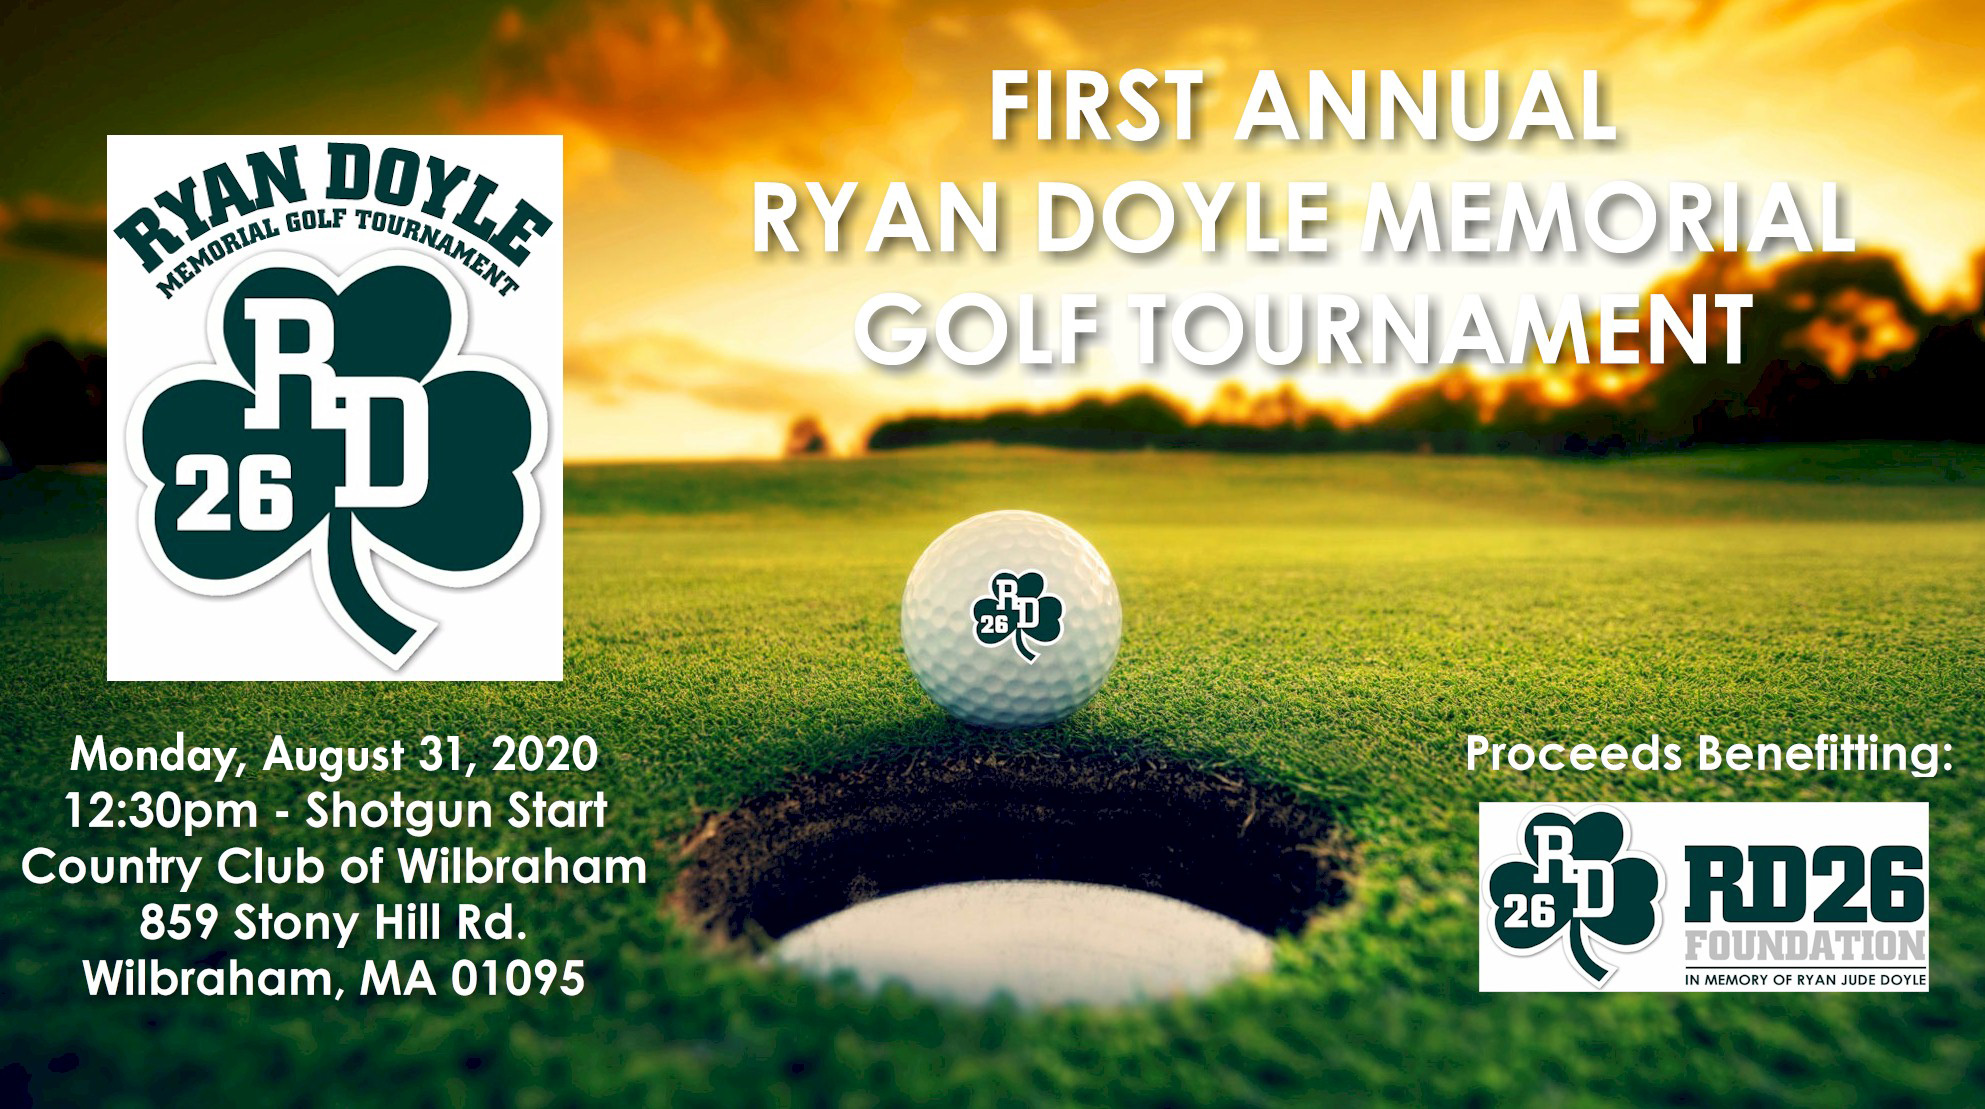 Ryan Doyle Memorial Golf Tournament